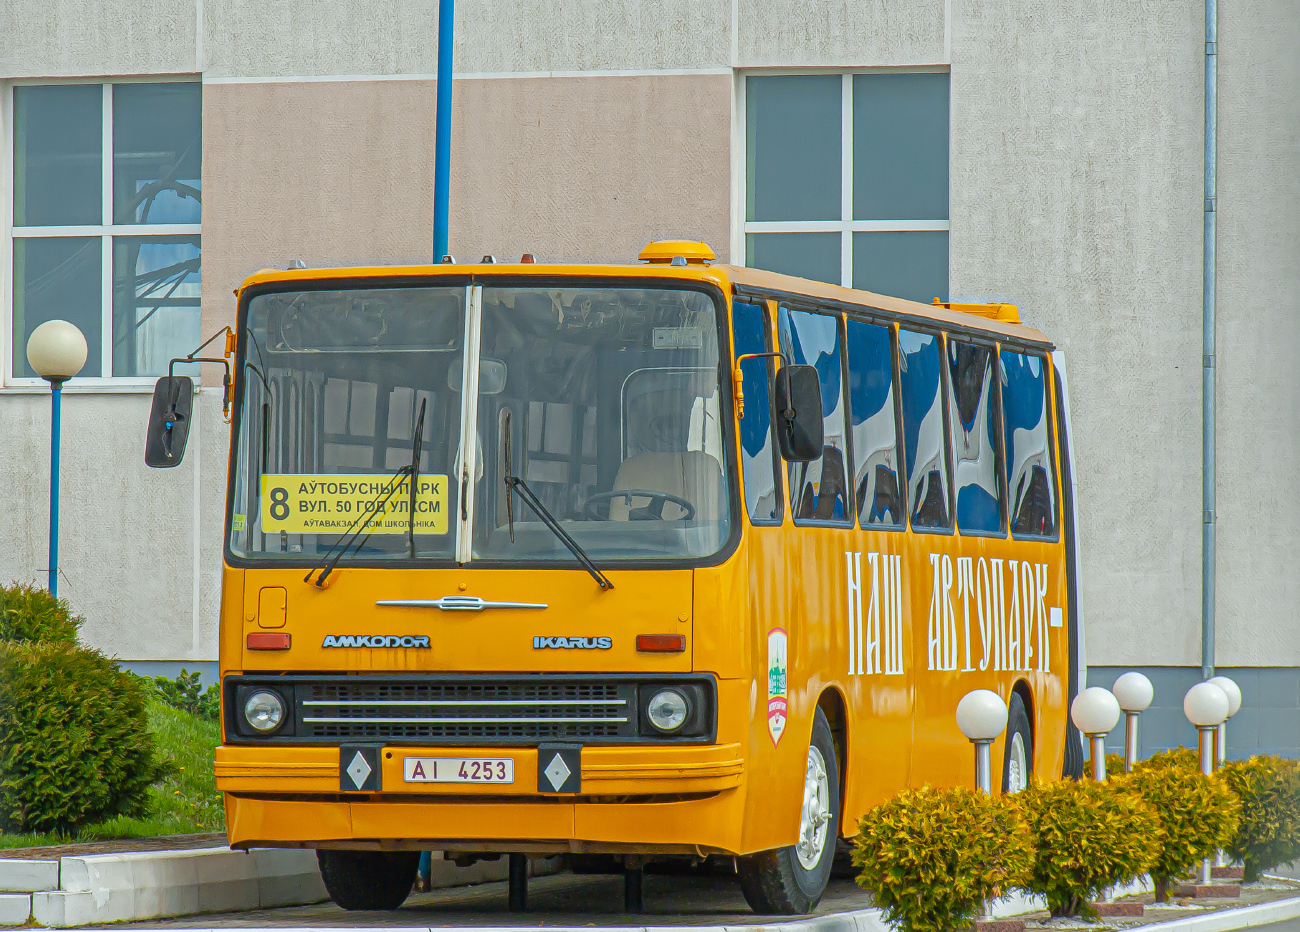 Baranovichi, Amkodor-10126 (Ikarus 280) № 11490; Автобусы-памятники